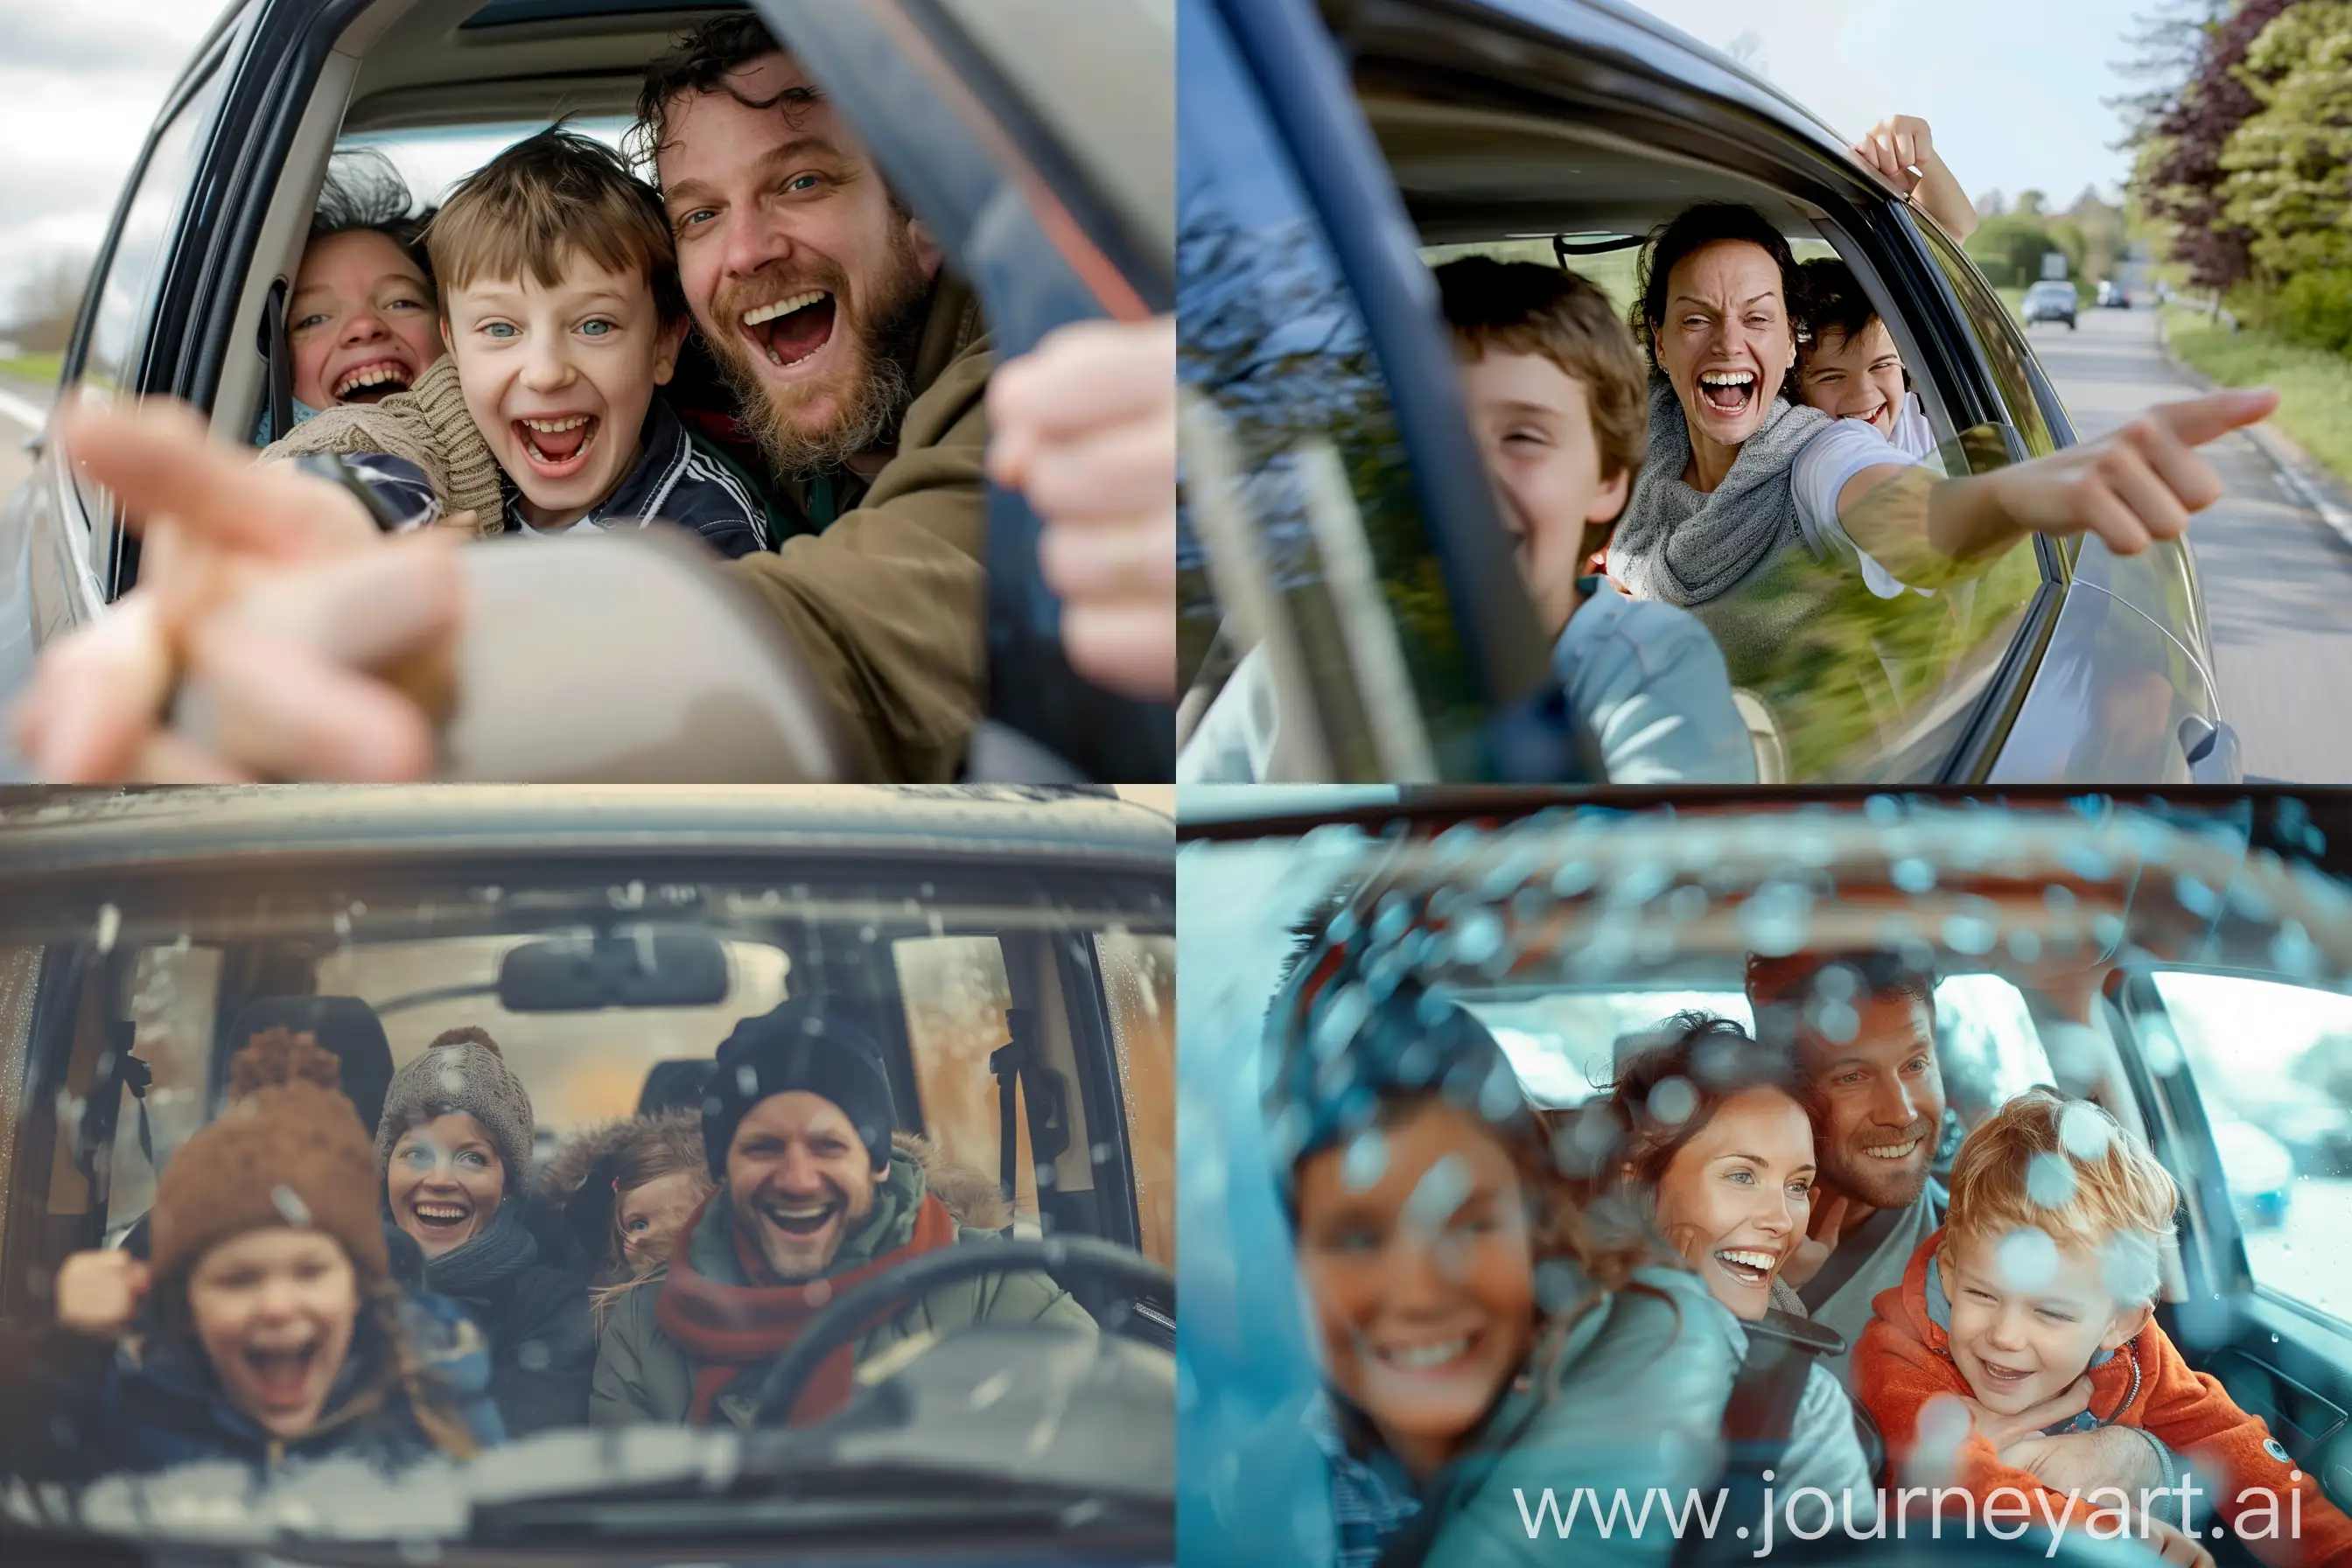 Joyful-Family-Road-Trip-Captured-from-Afar